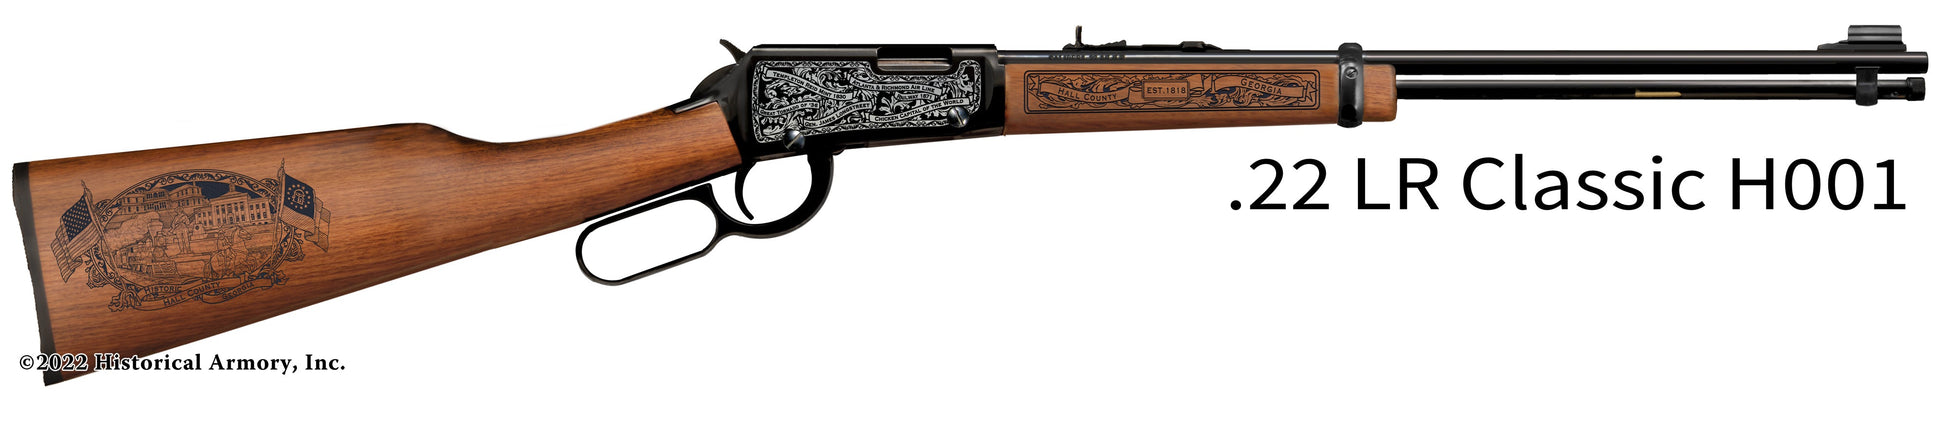 Hall County Georgia Engraved Henry H001 Rifle